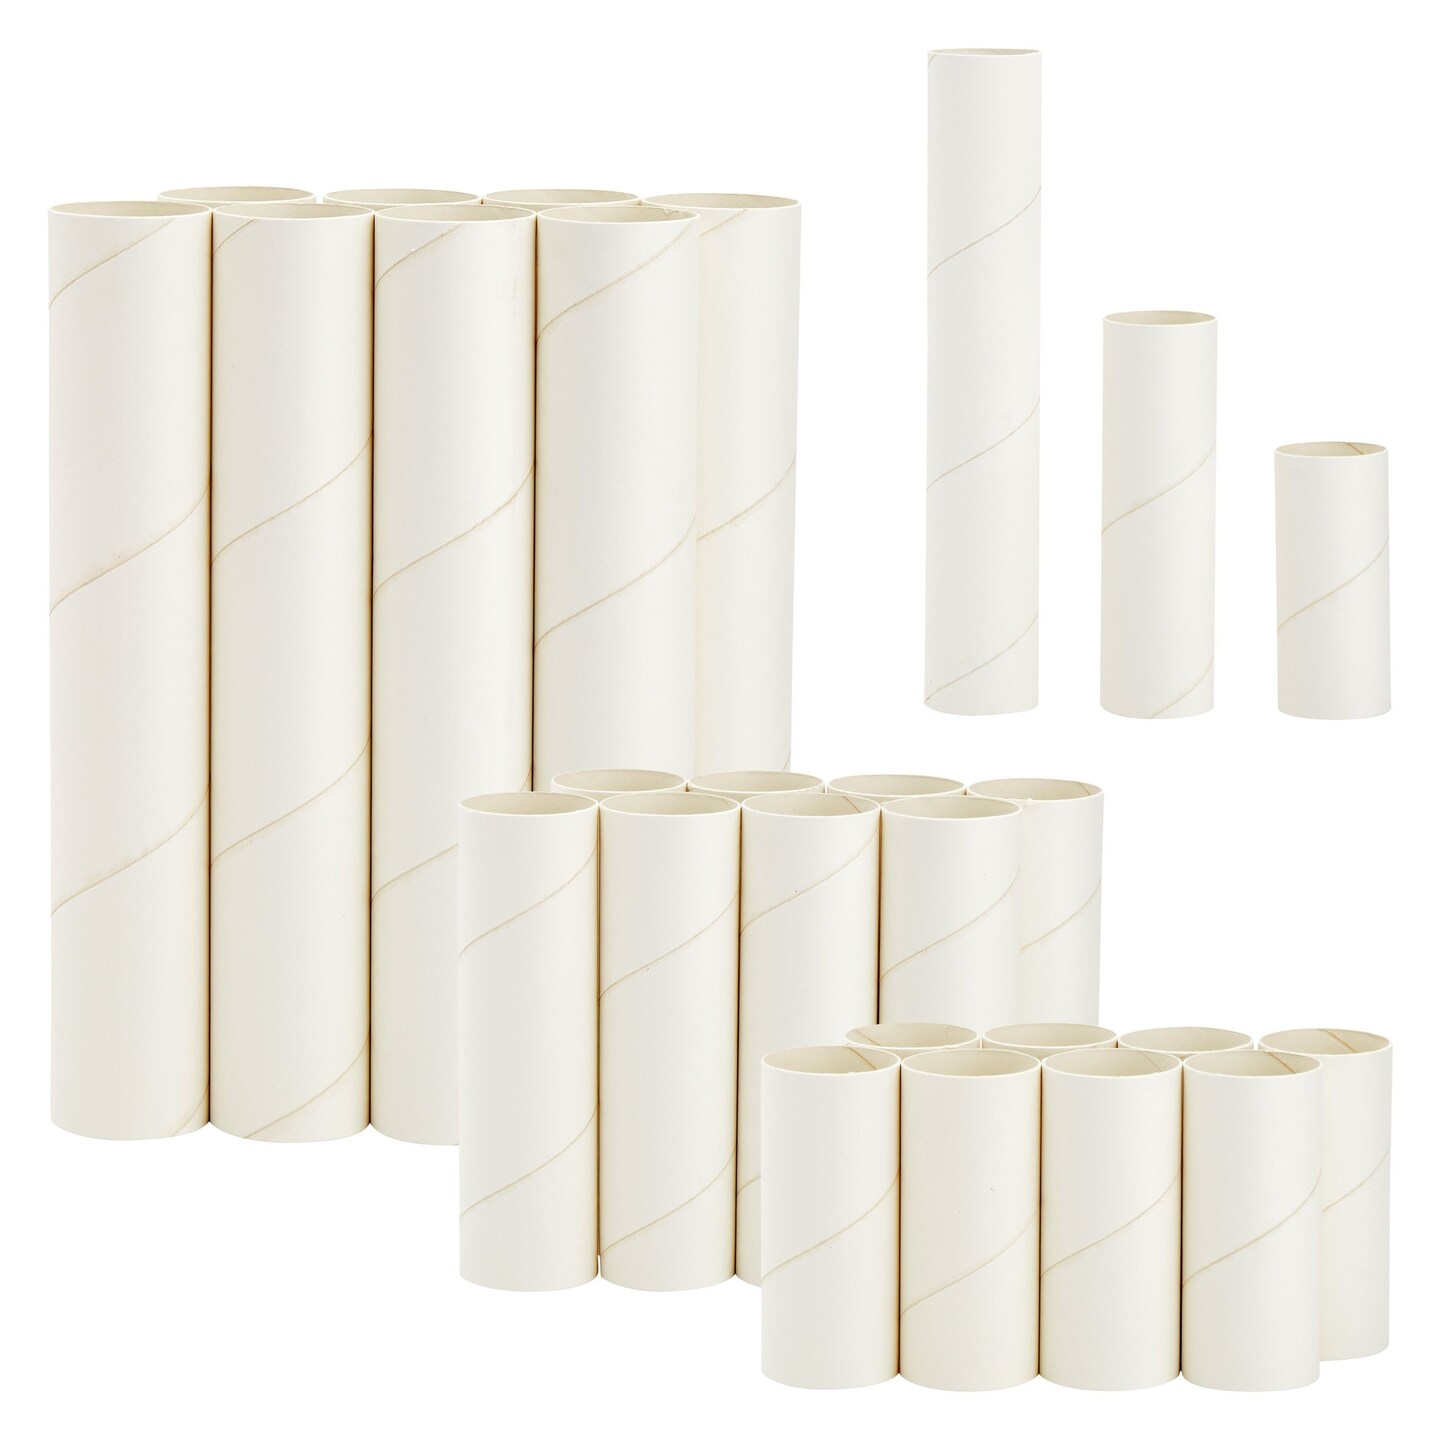 Set of 6 Cardboard Tubes, Craft Paper Tubes, Sturdy, Craft Supply